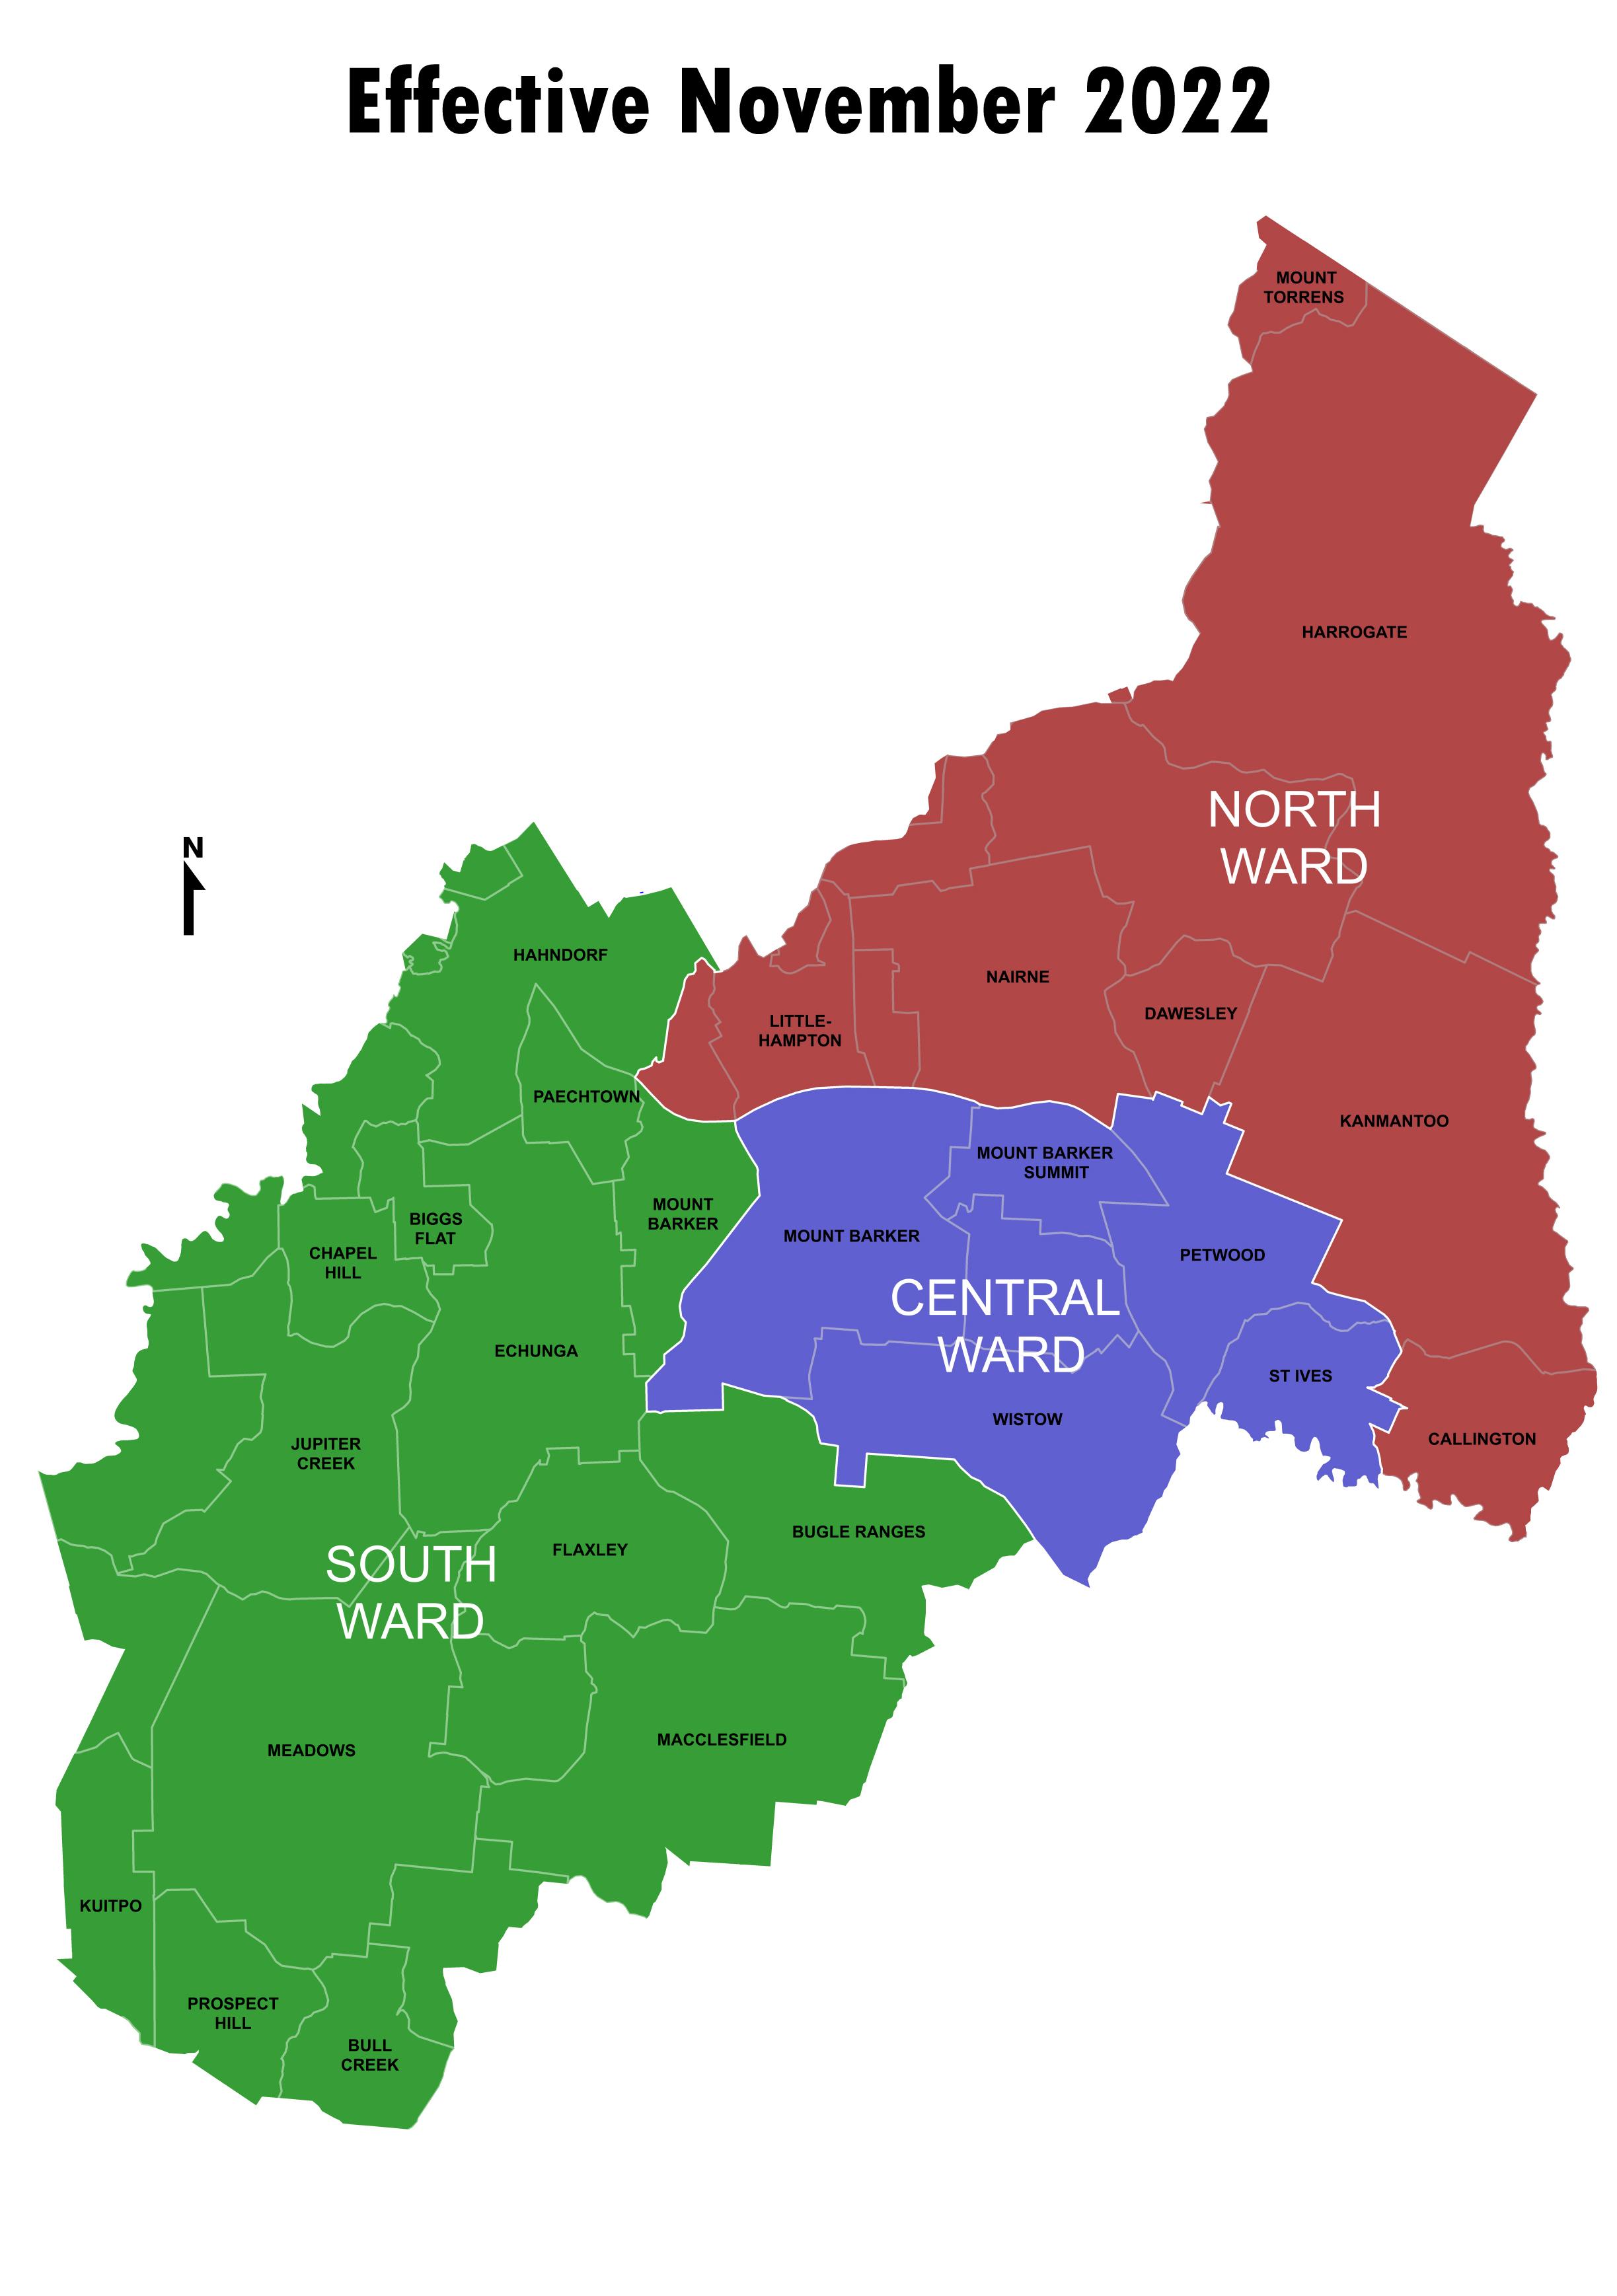 Council Ward Map effective November 2022